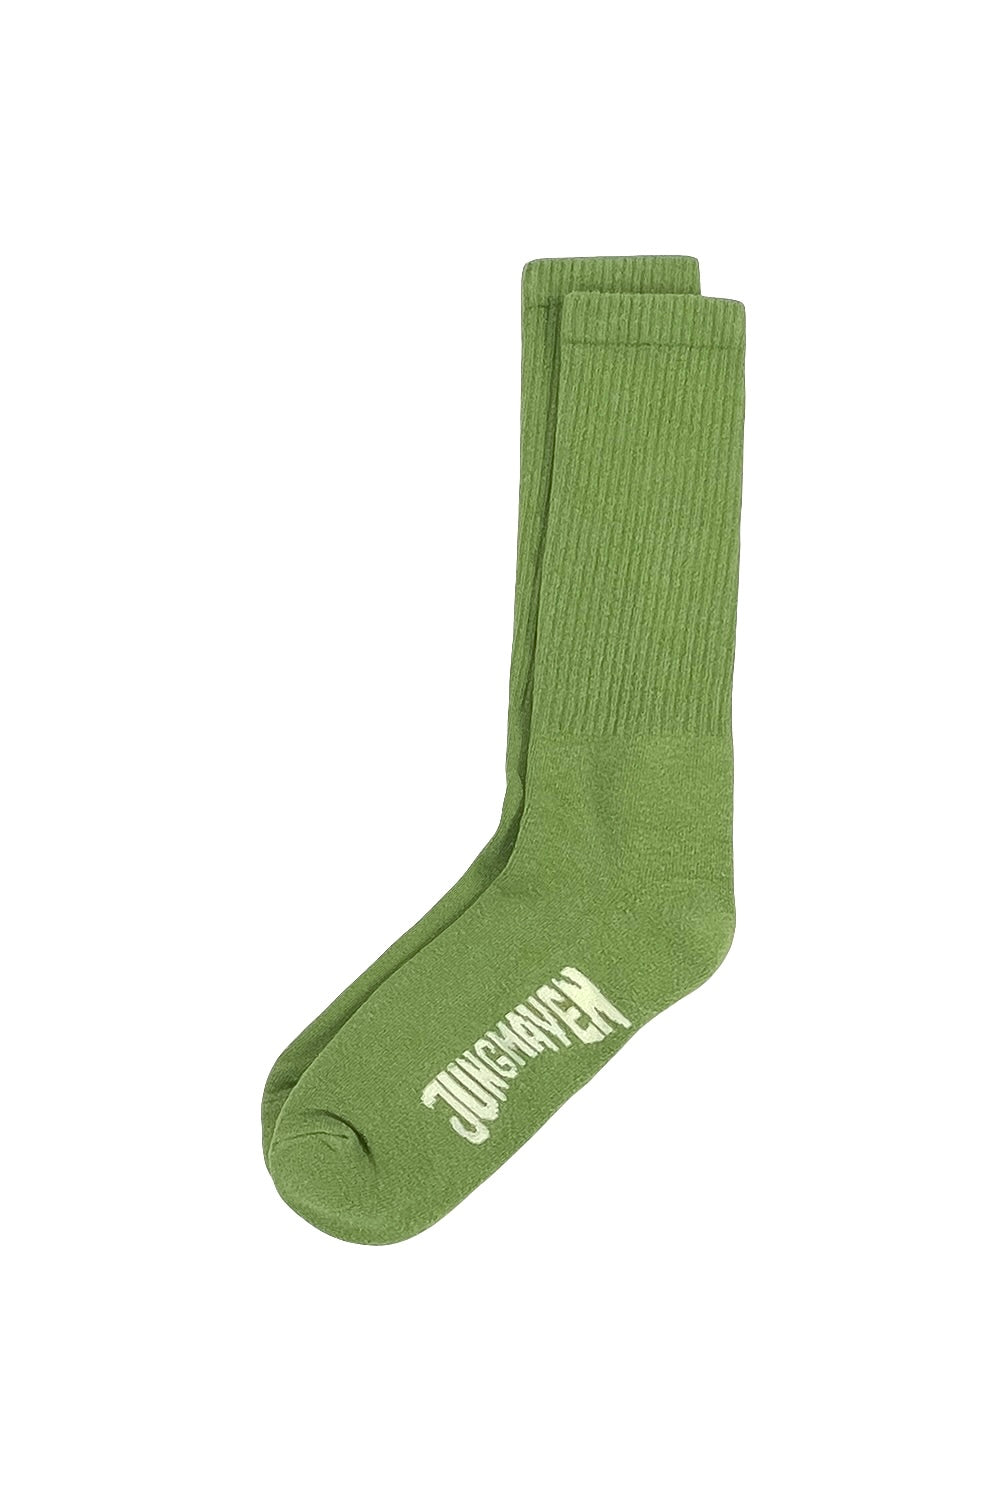 Hemp Crew Socks | Jungmaven Hemp Clothing & Accessories / Color: Dark Matcha